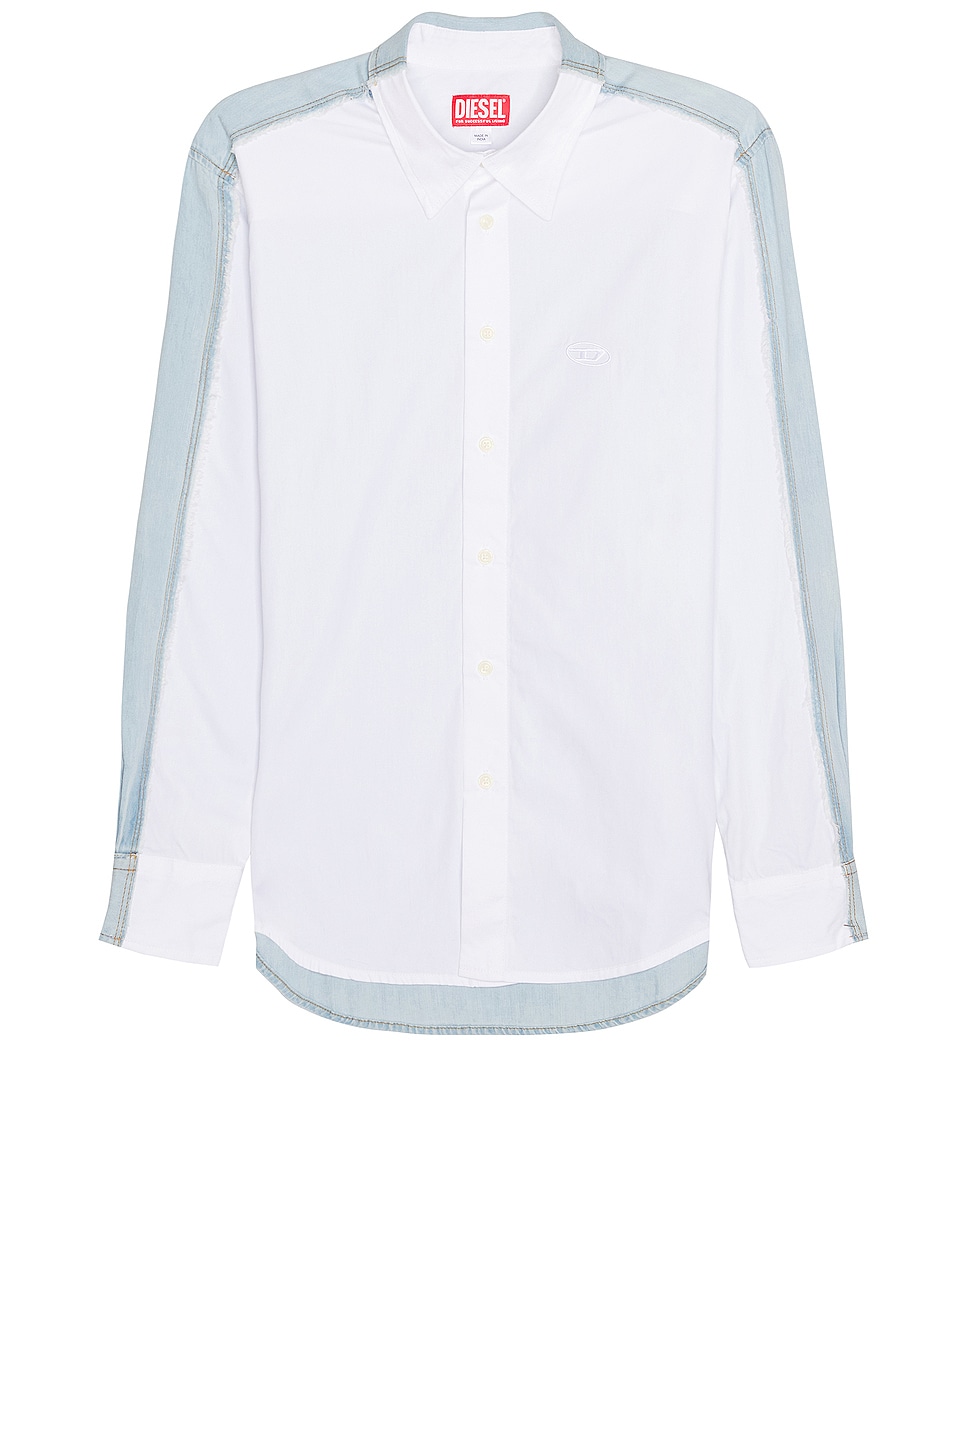 Image 1 of Diesel Warh Shirt in White